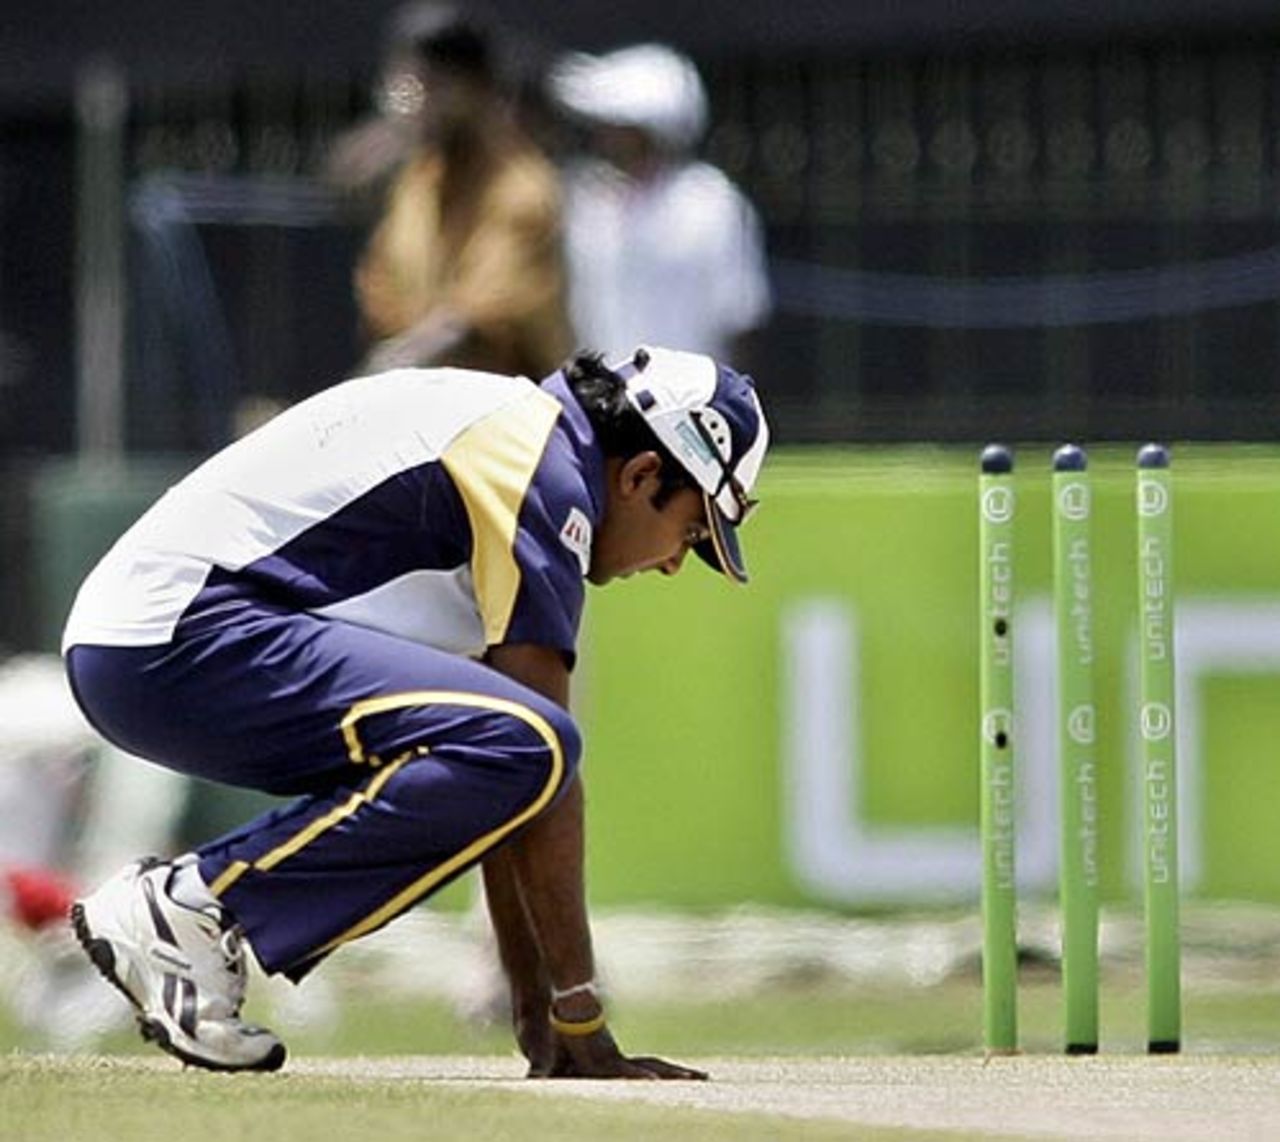 Mahela Jayawardene takes a look at the pitch at the SSC, Sri Lanka v India, 1st ODI, Colombo, August 18, 2006